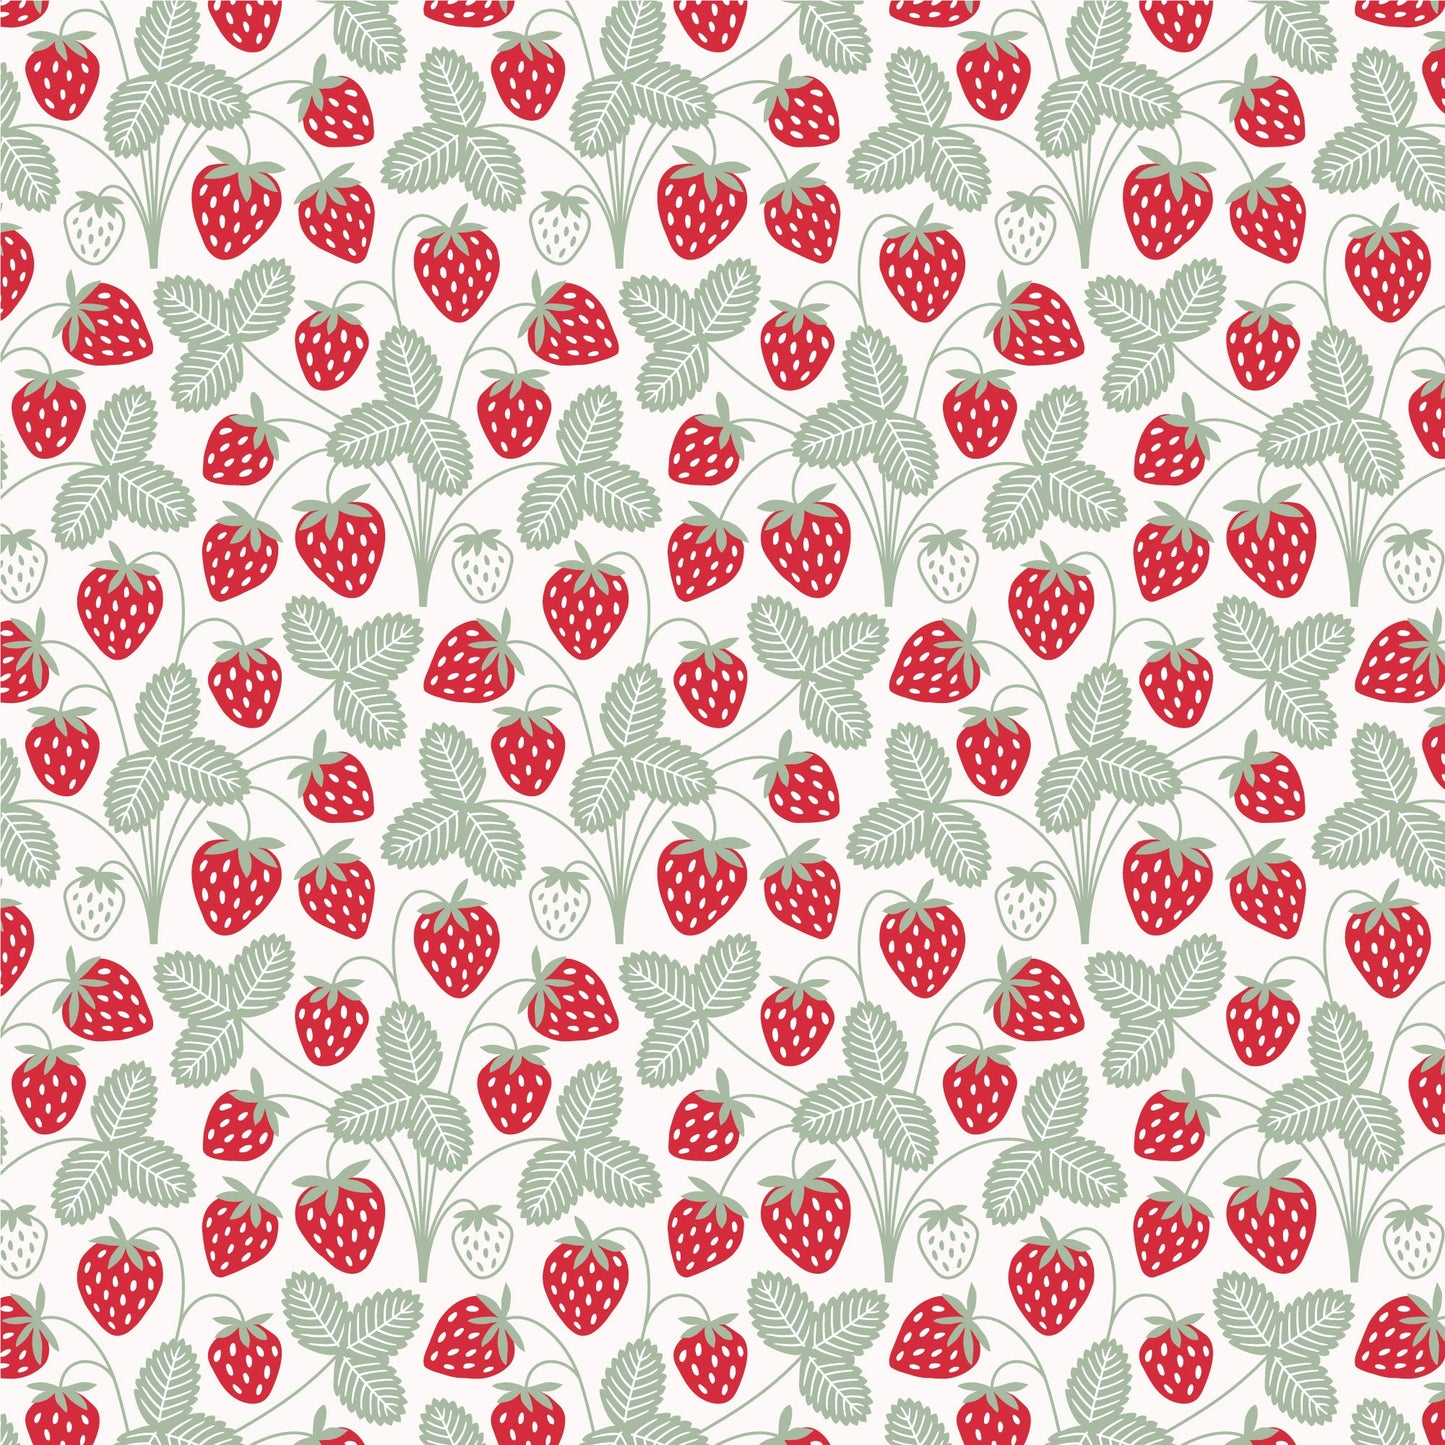 Summer Romper - Strawberries Red & Green